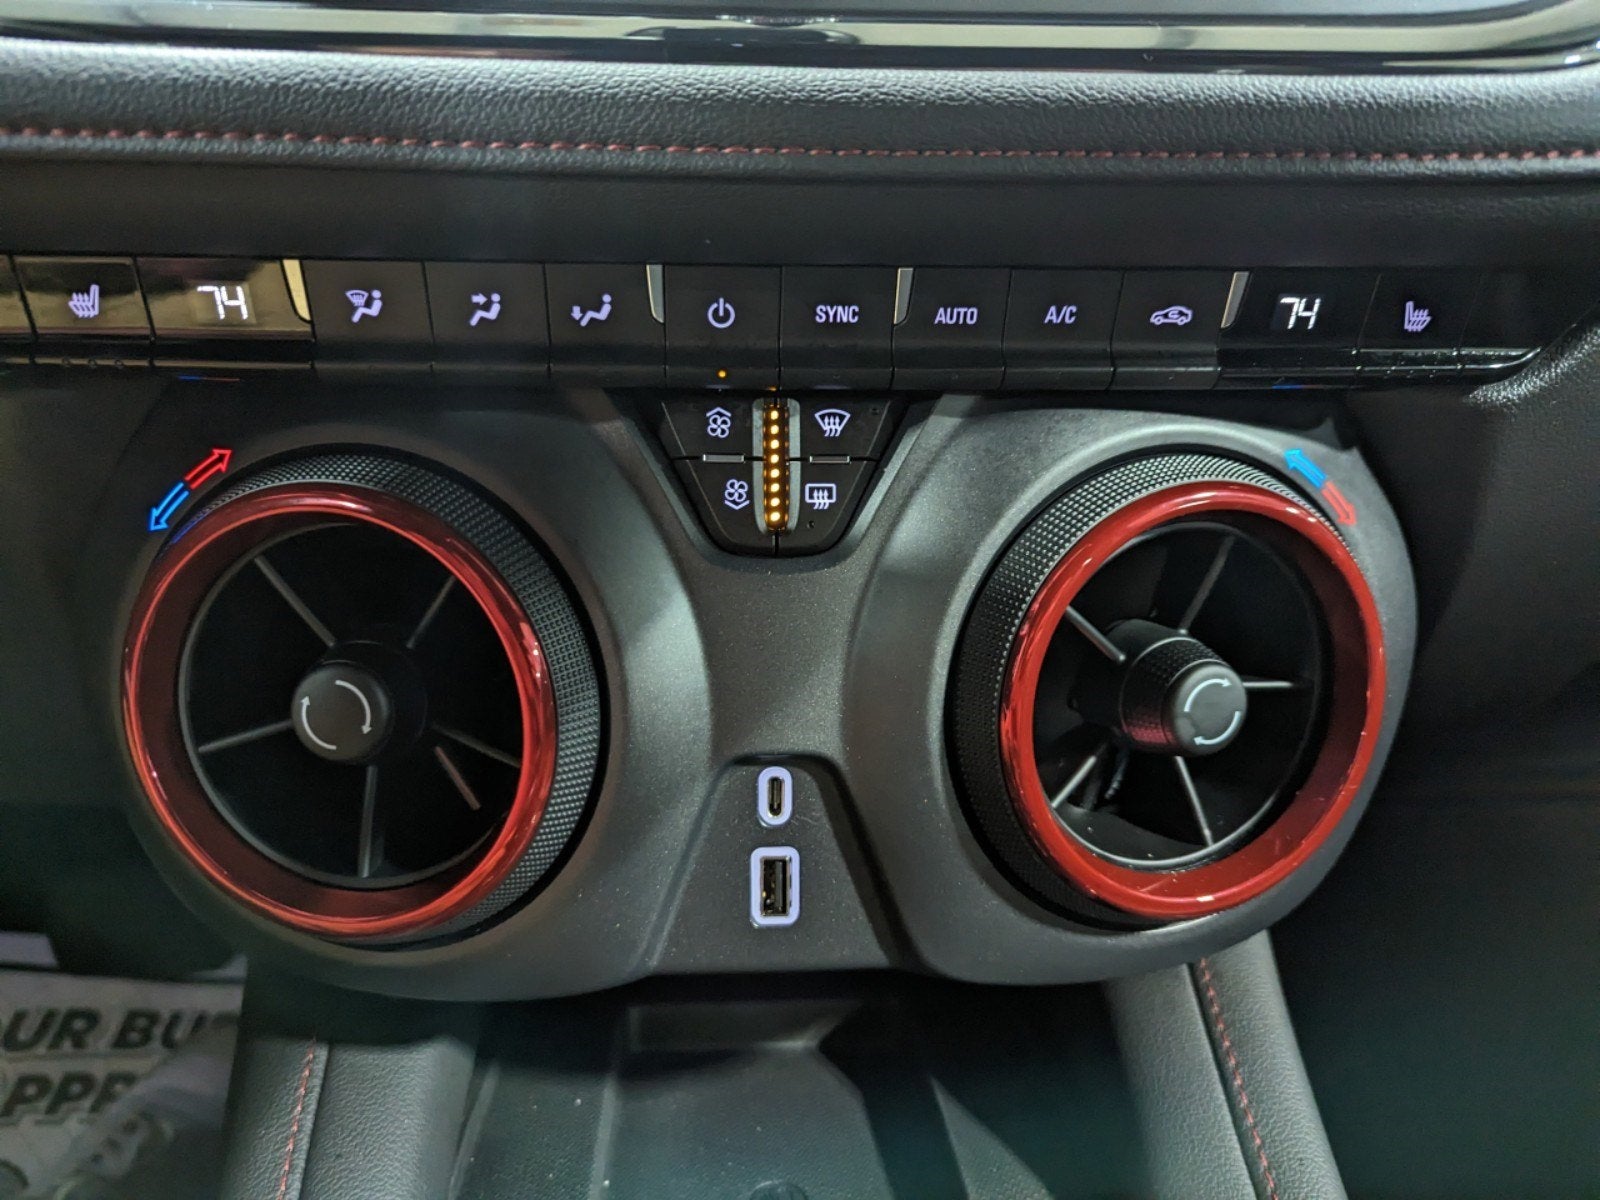 2021 Chevrolet Blazer RS All Wheel Drive Premium Leather Heated Preferred Equipment Pkg Nav